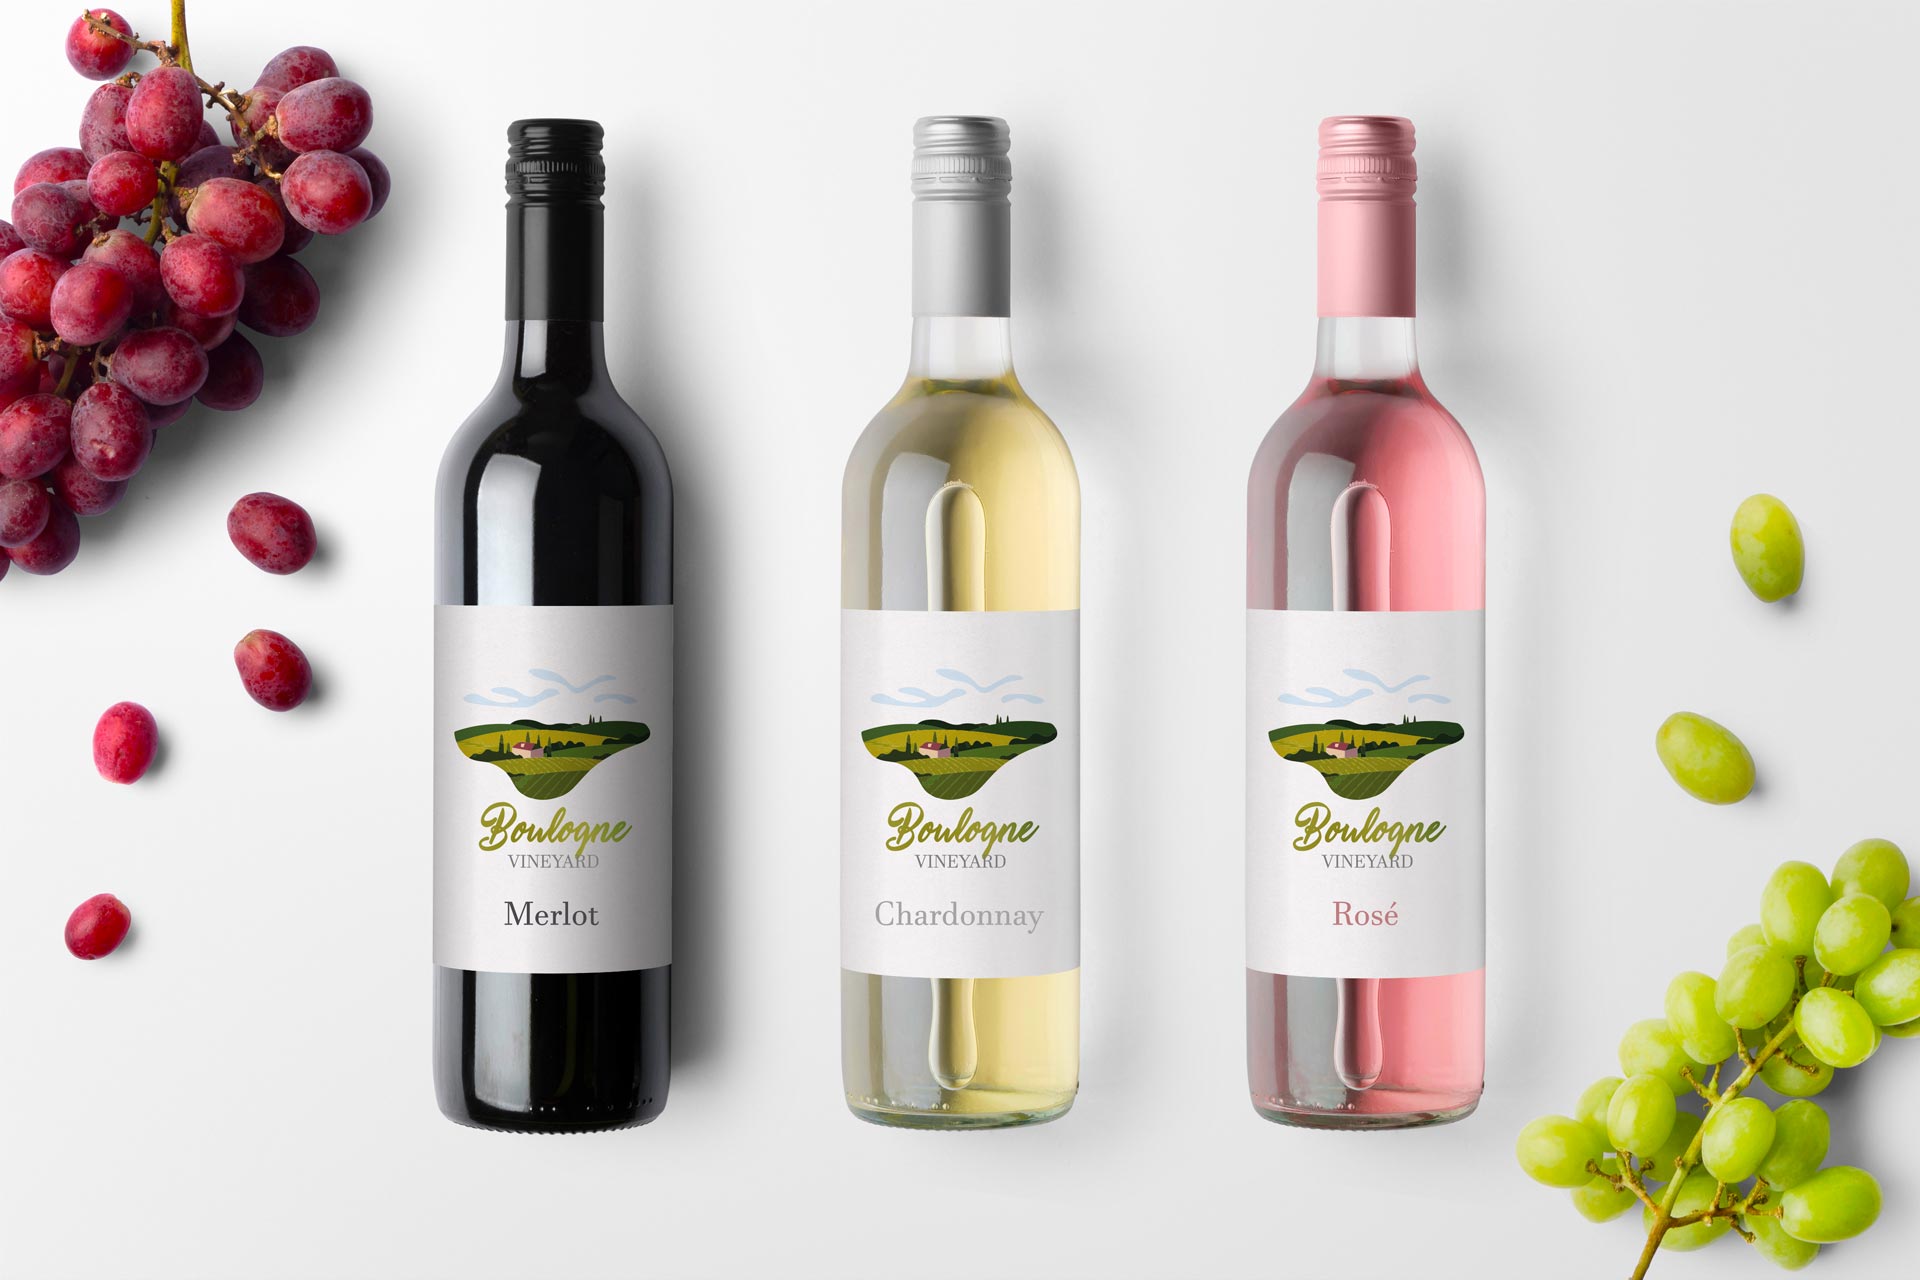 boulogne wine company branding - Professional Website Design Company